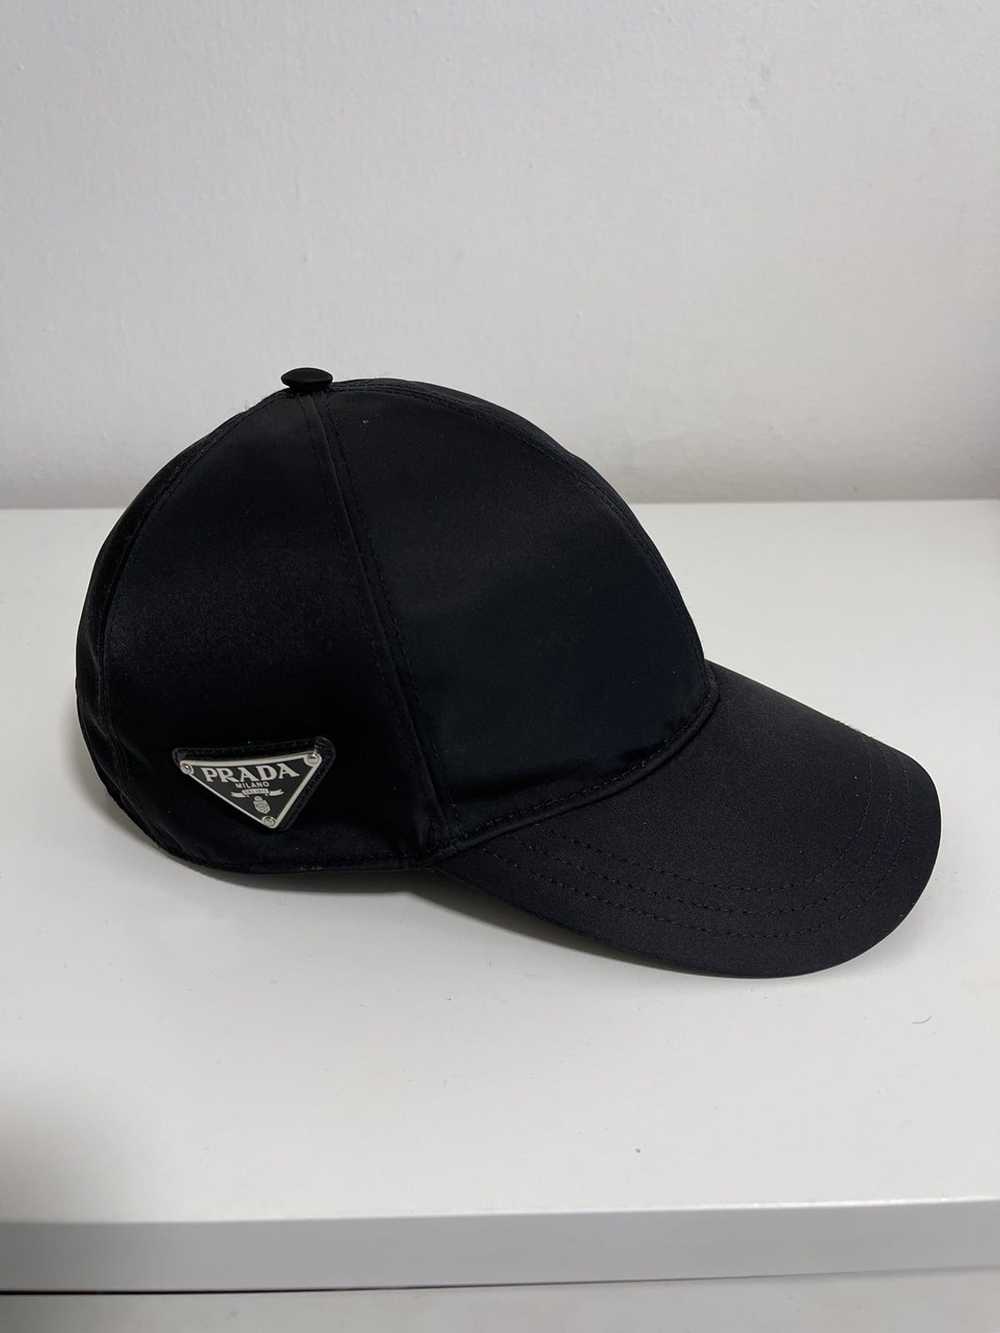 Prada Prada Re-Nylon hat - image 1